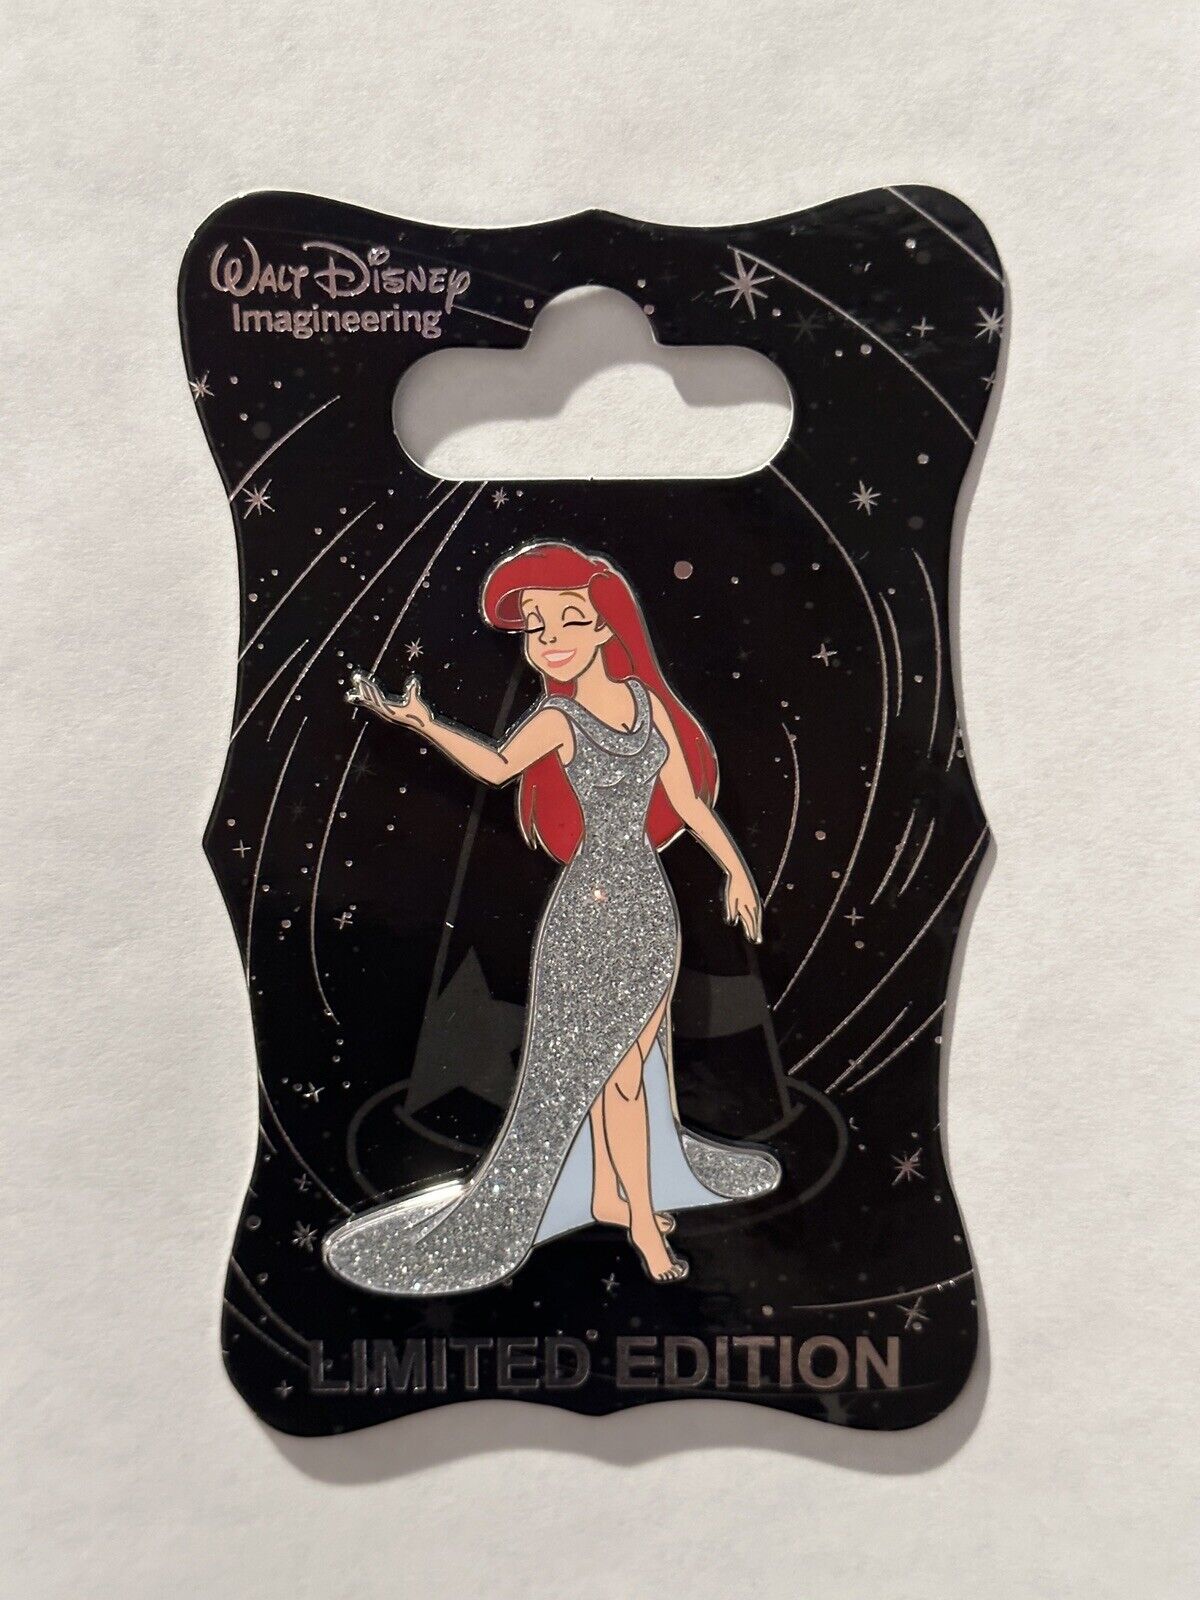 Disney WDI Dress Series The Little Mermaid Ariel Exit Dress Pin LE 250